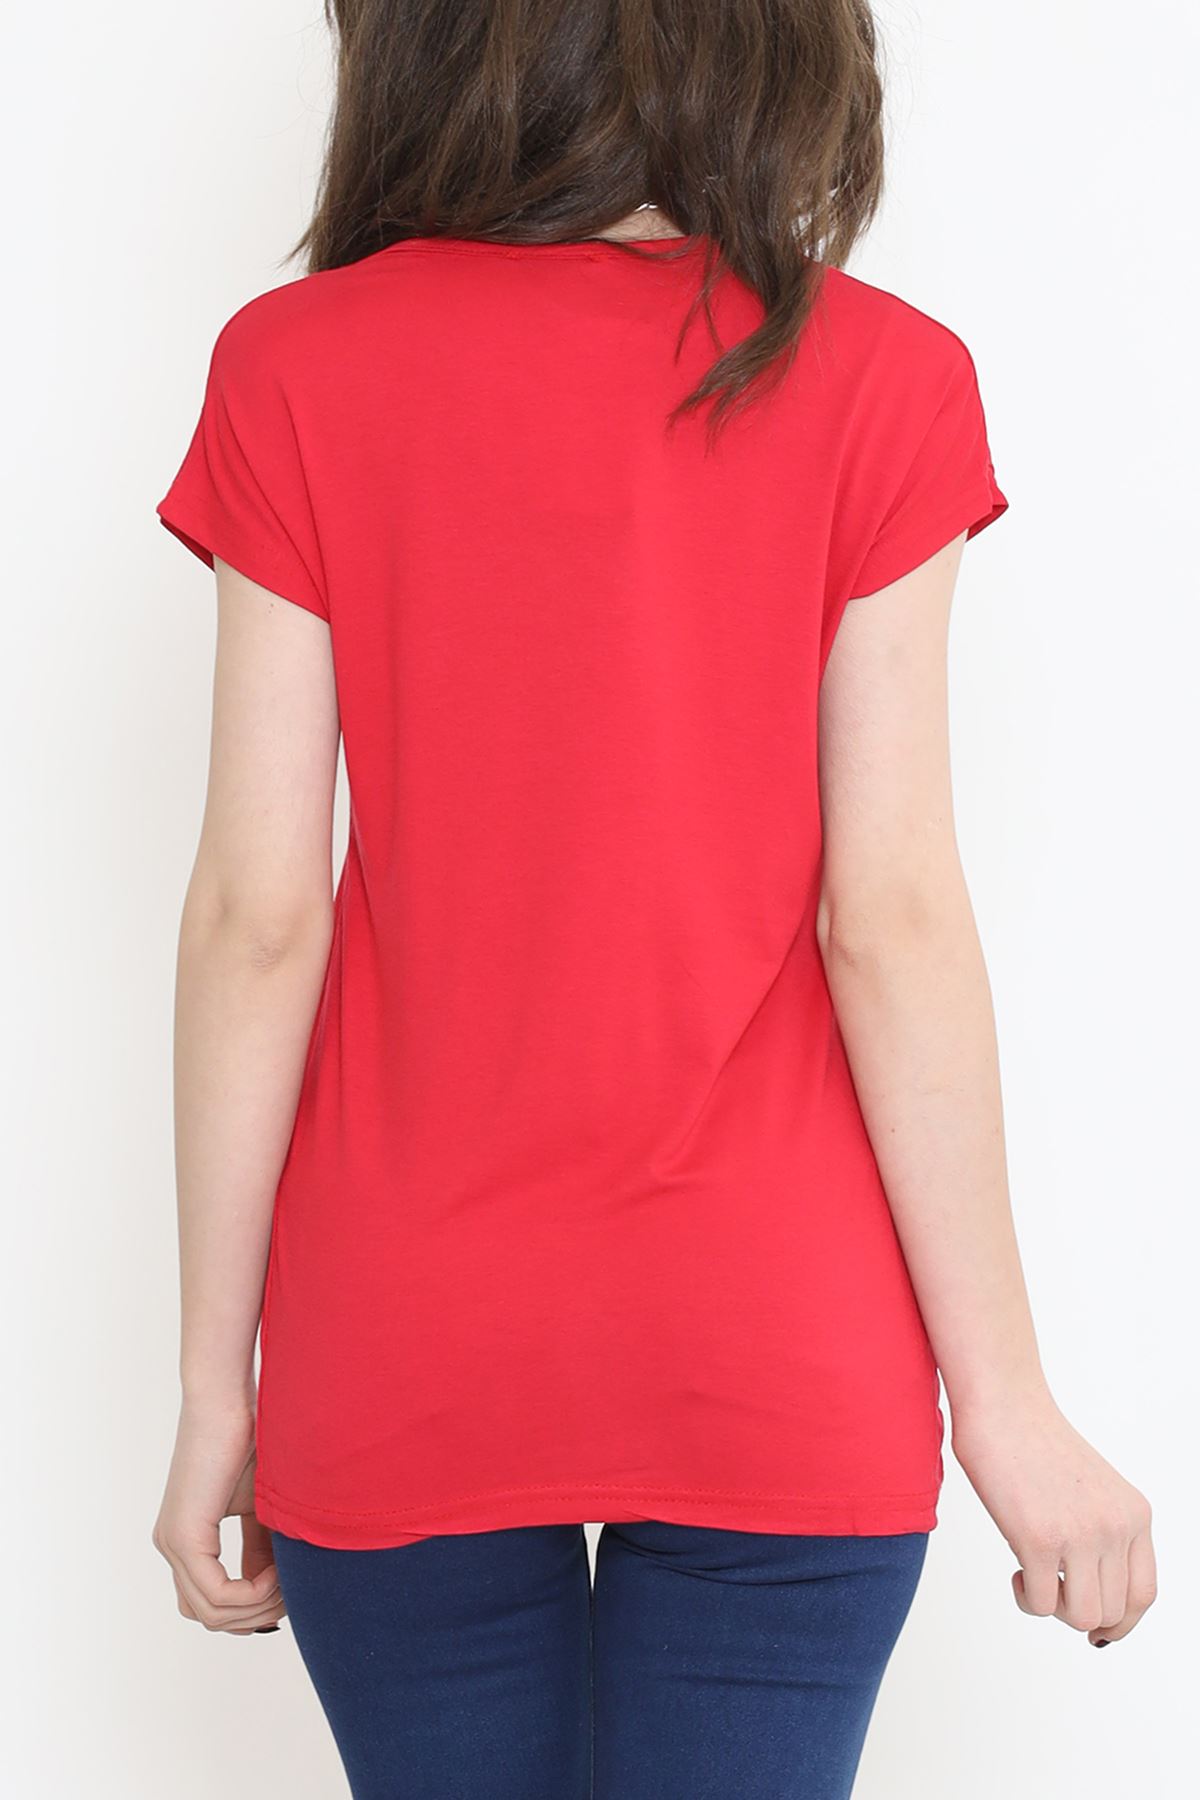 Taş İşlemeli Bluz Kırmızı - 17147.599.